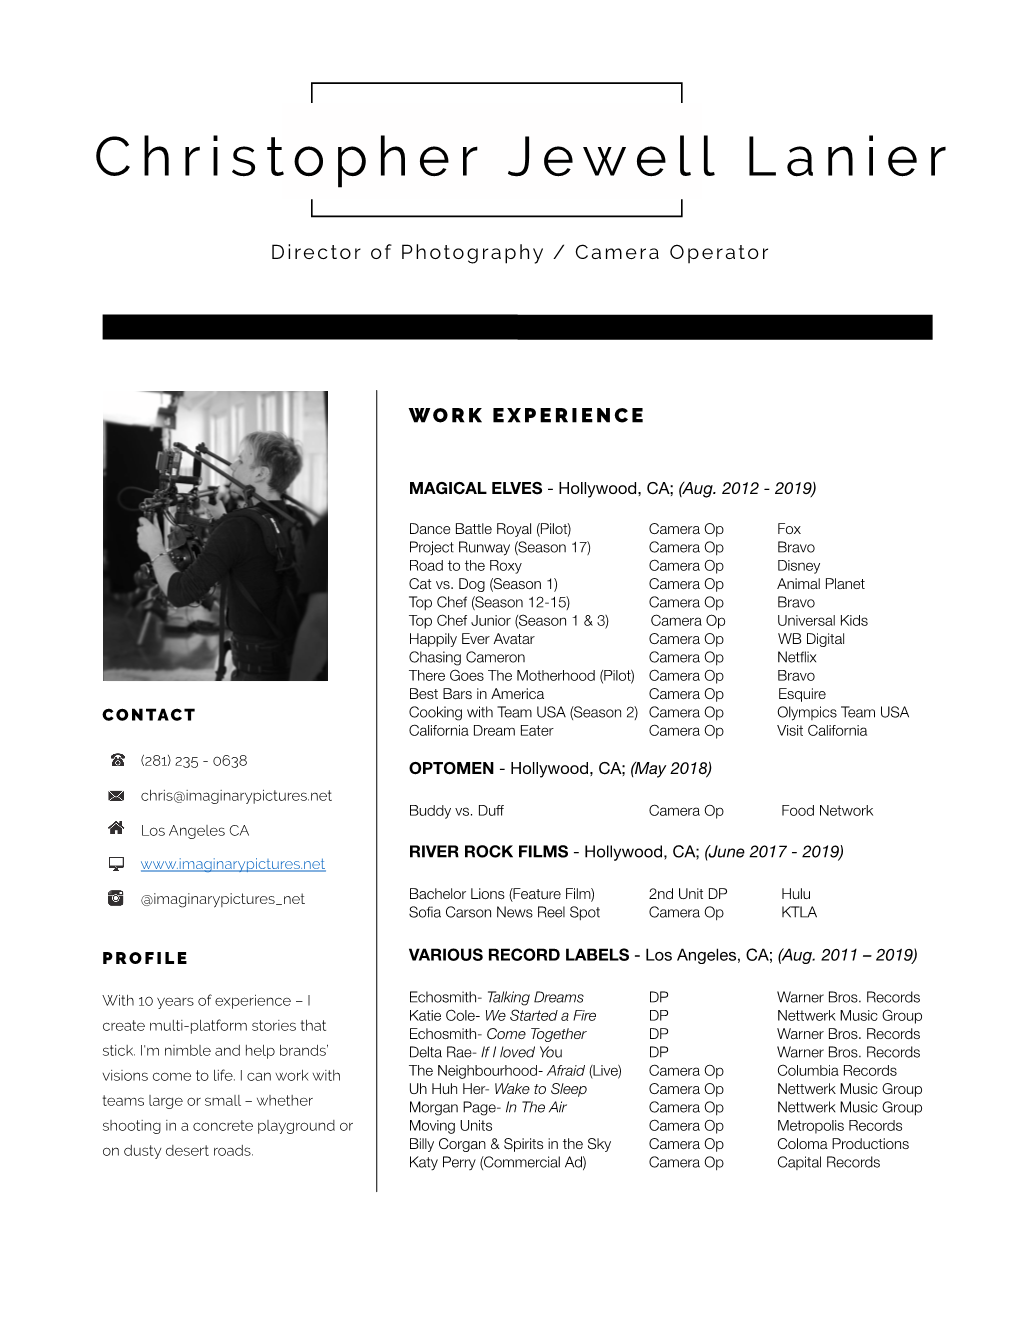 Christopherjewelllanier CAM OP Resume2019.Pages